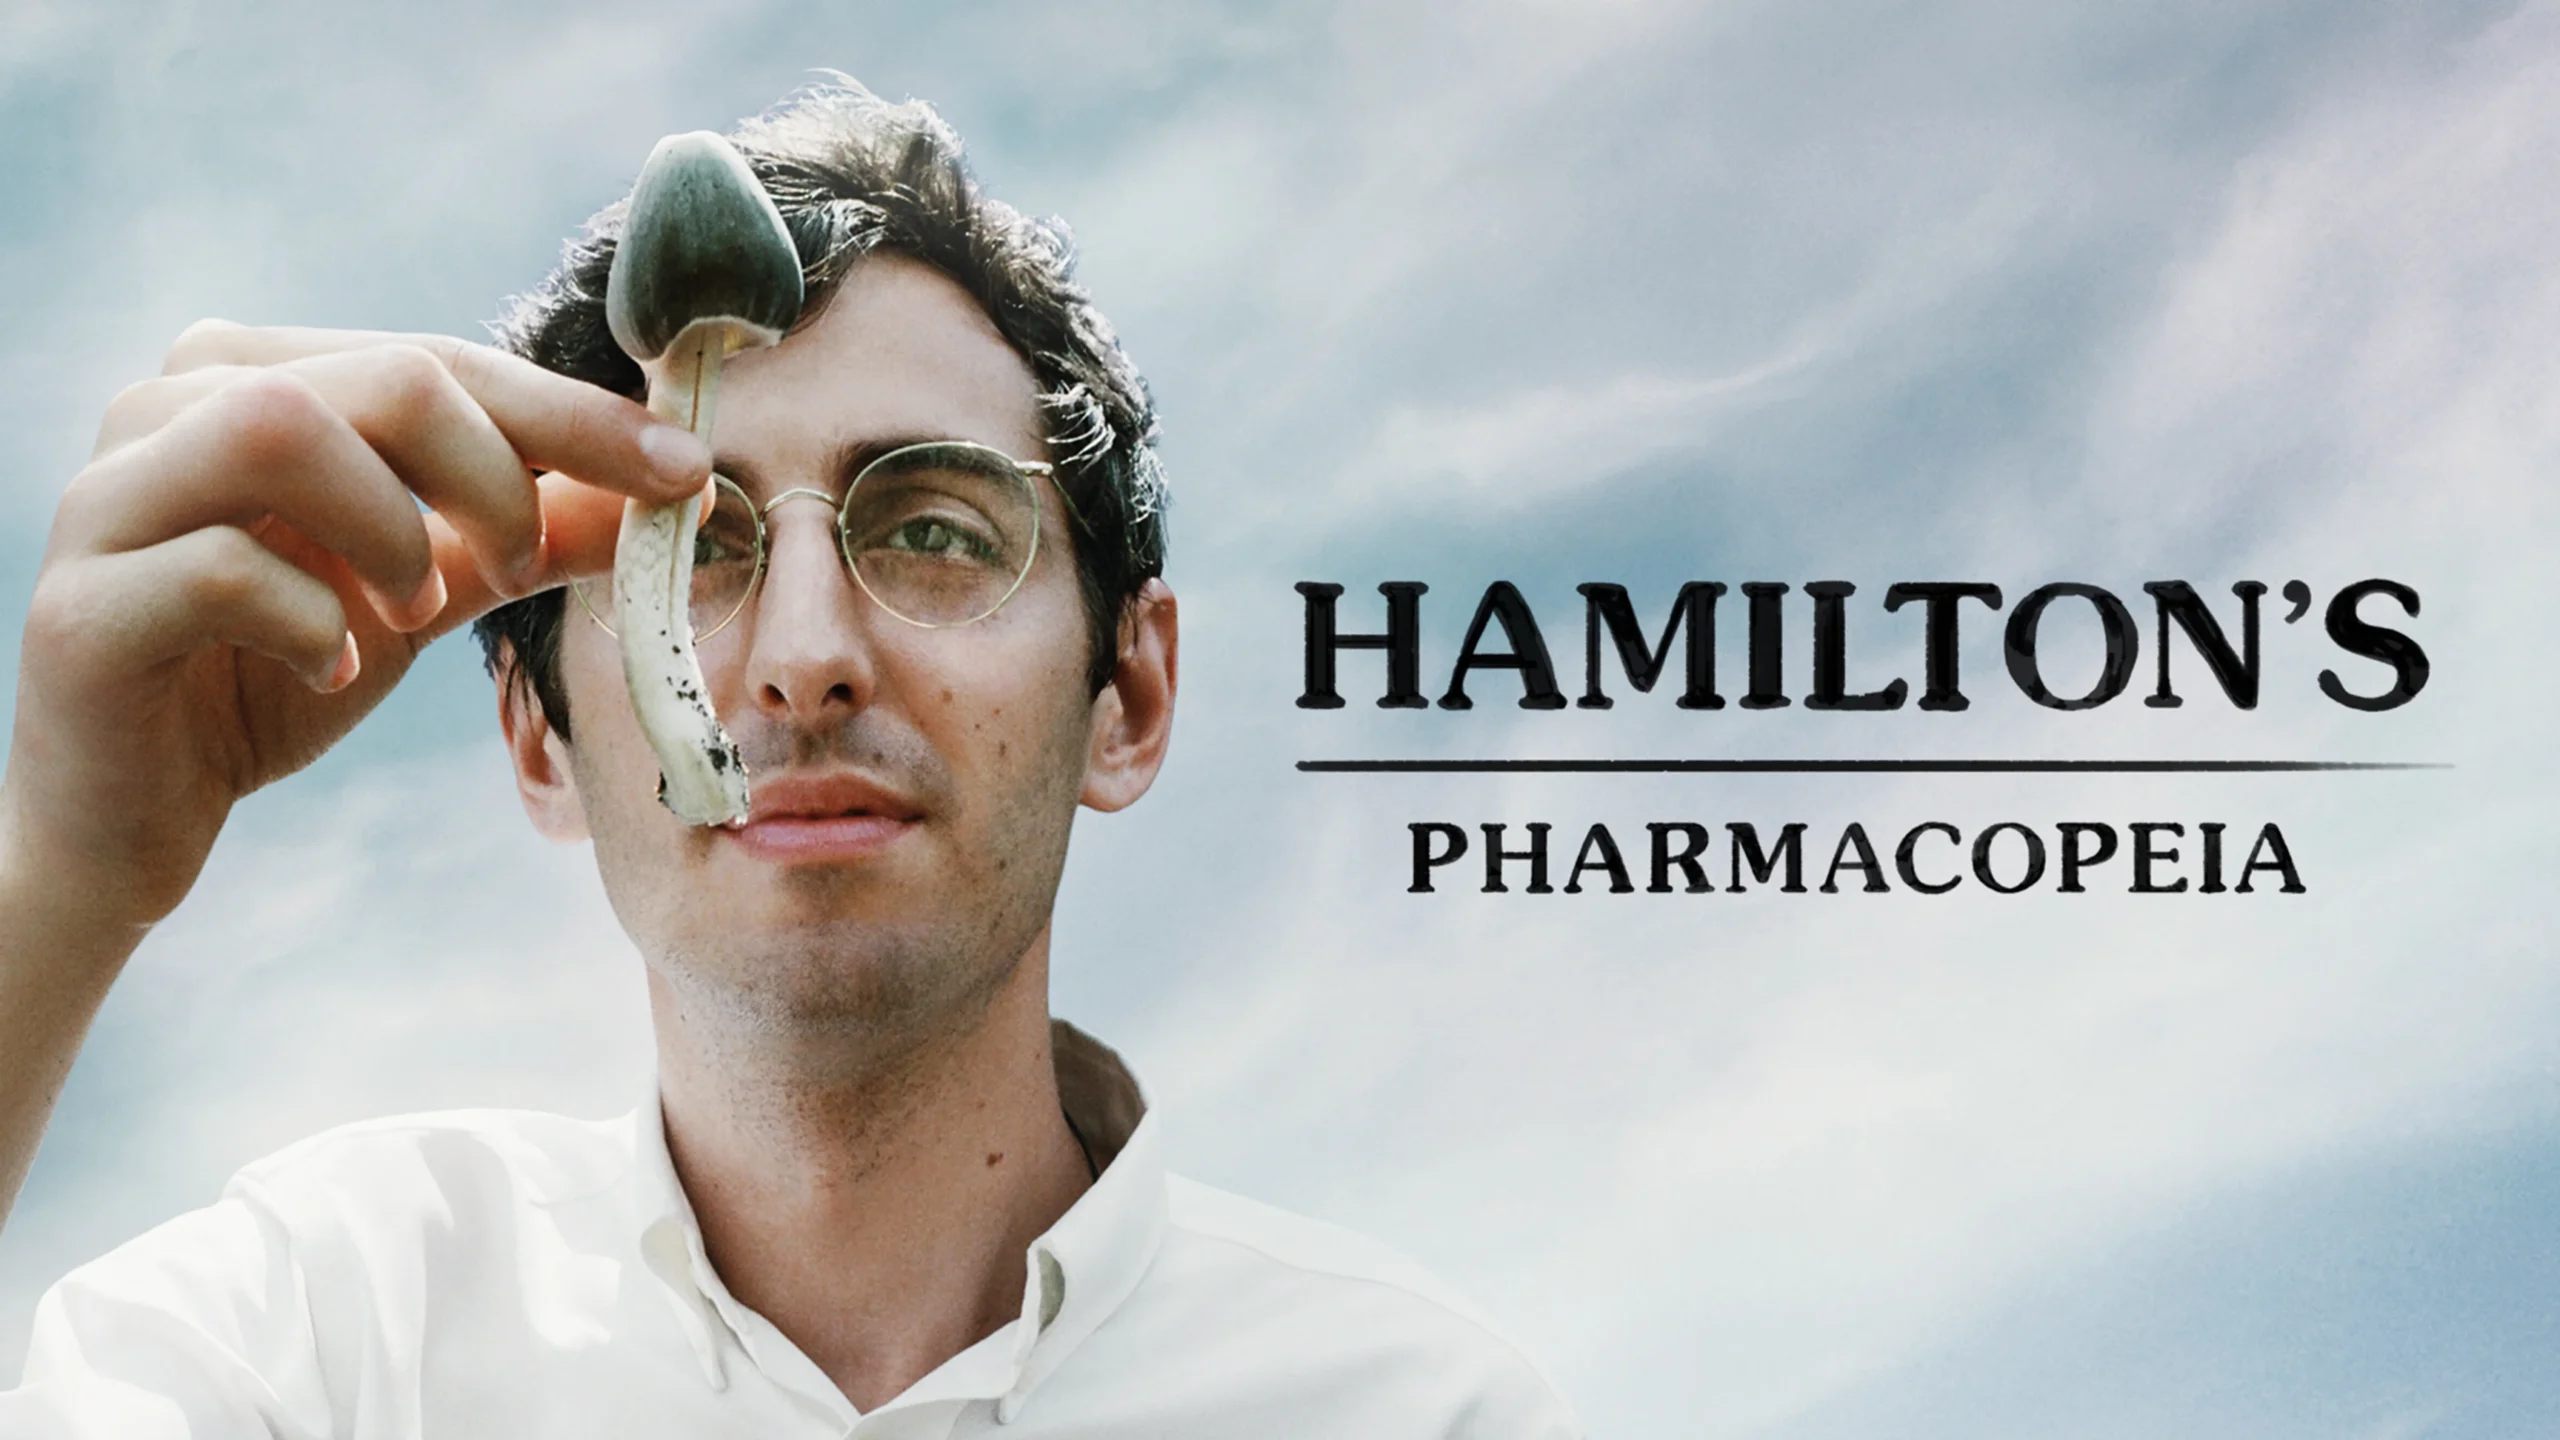 Documental sobre la Farmacopea Hamiltons